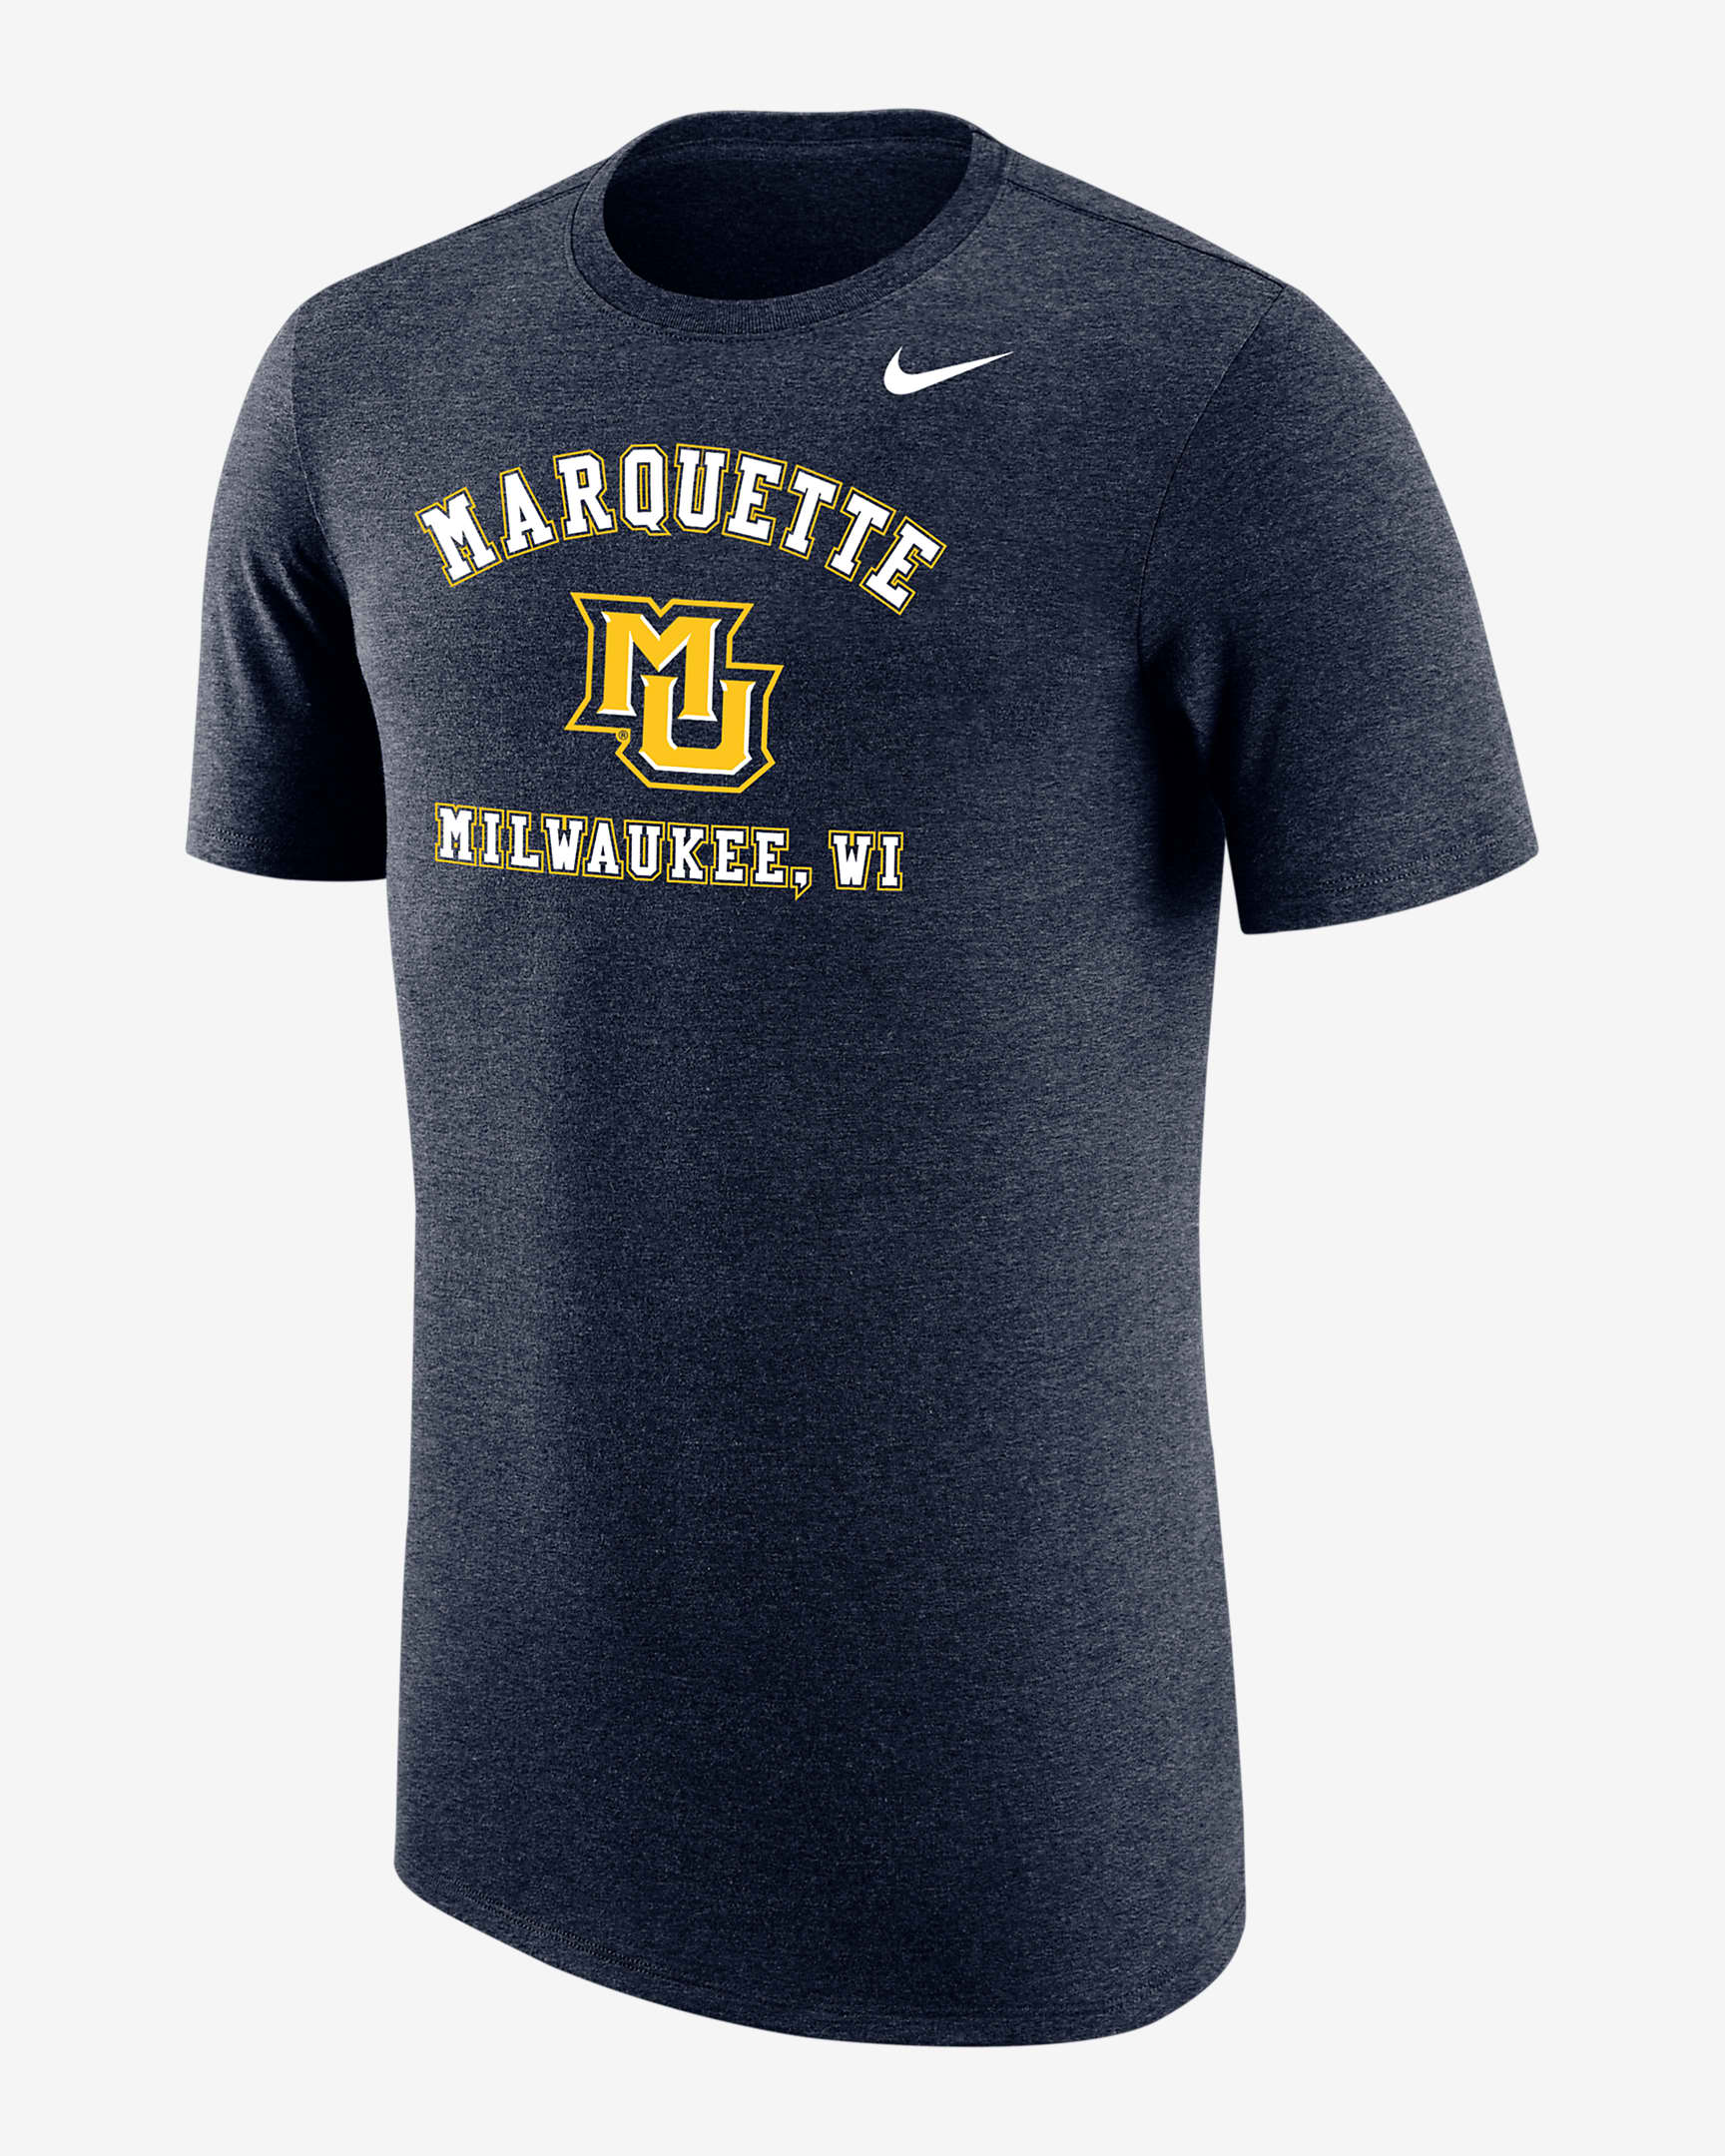 Marquette Men's Nike College T-Shirt. Nike.com